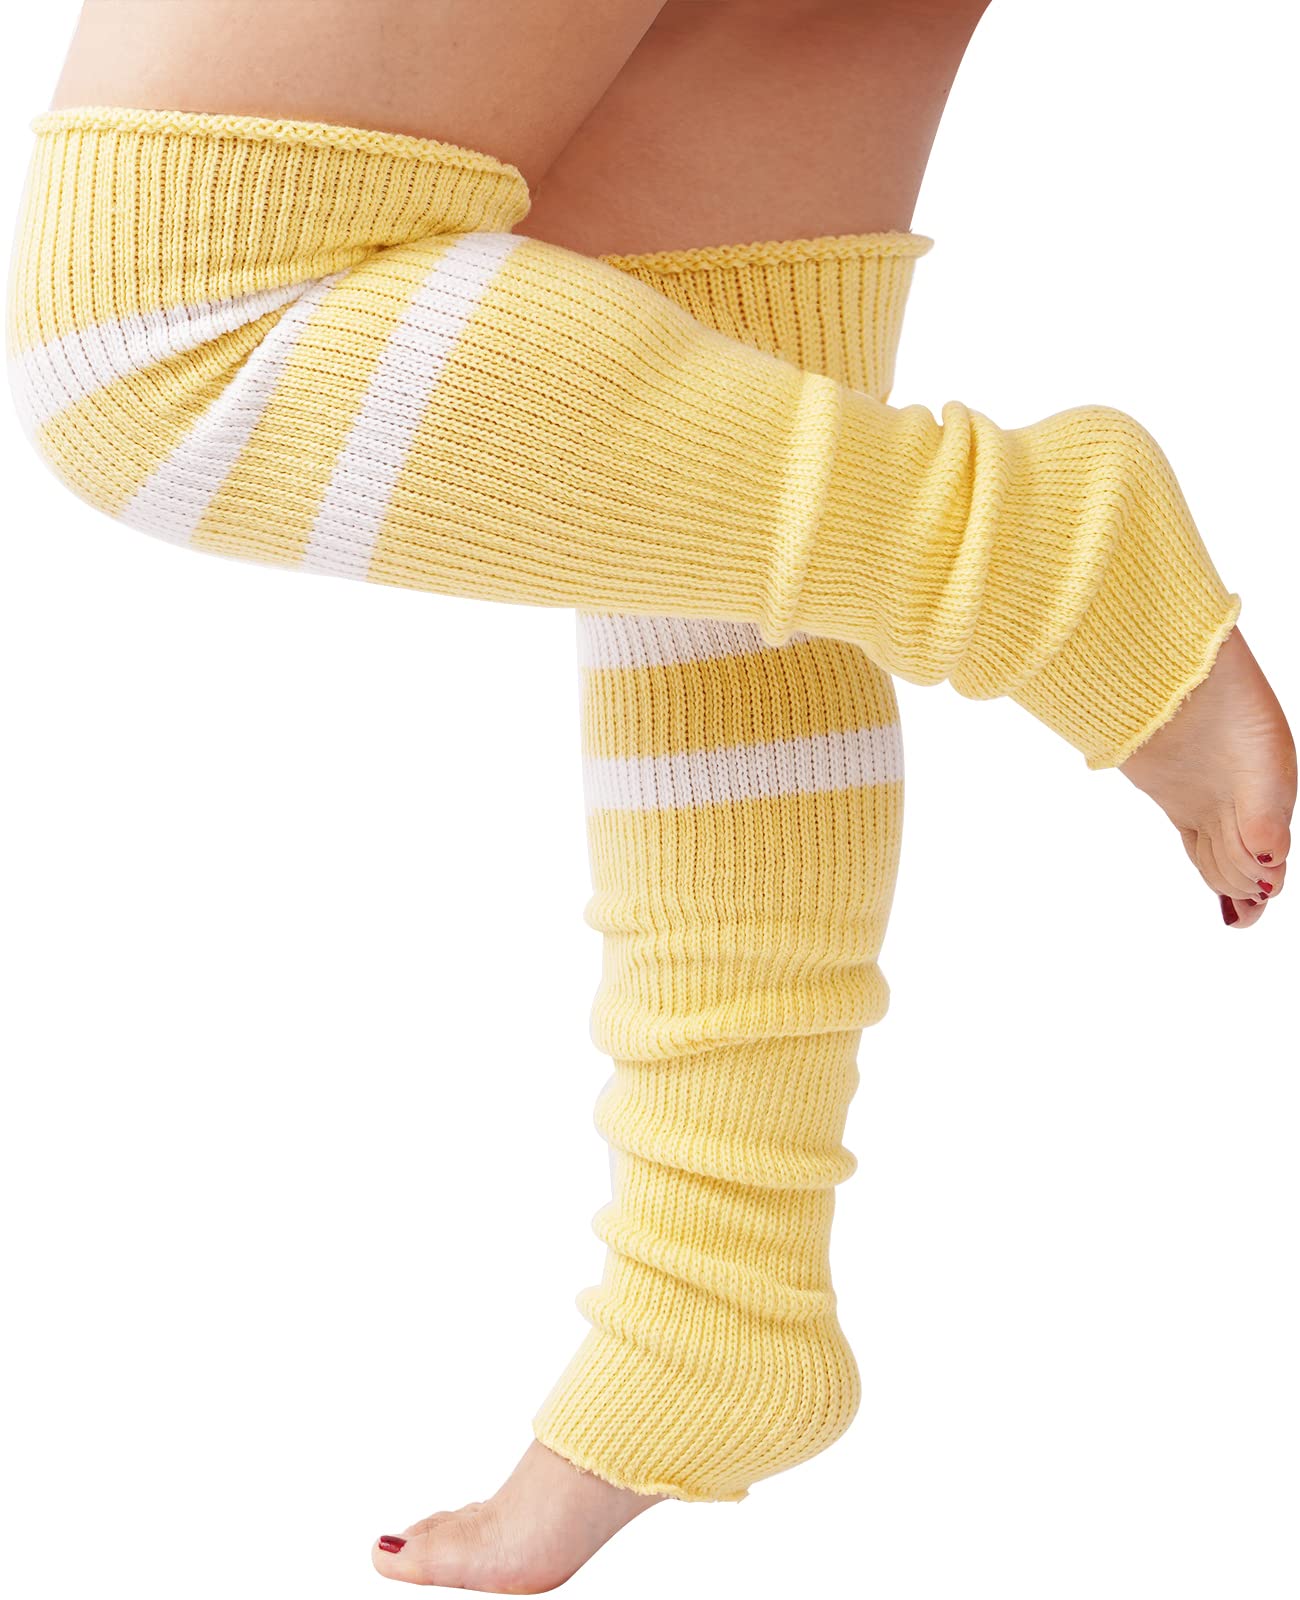 Plus Size Leg Warmers for Women- Yellow White